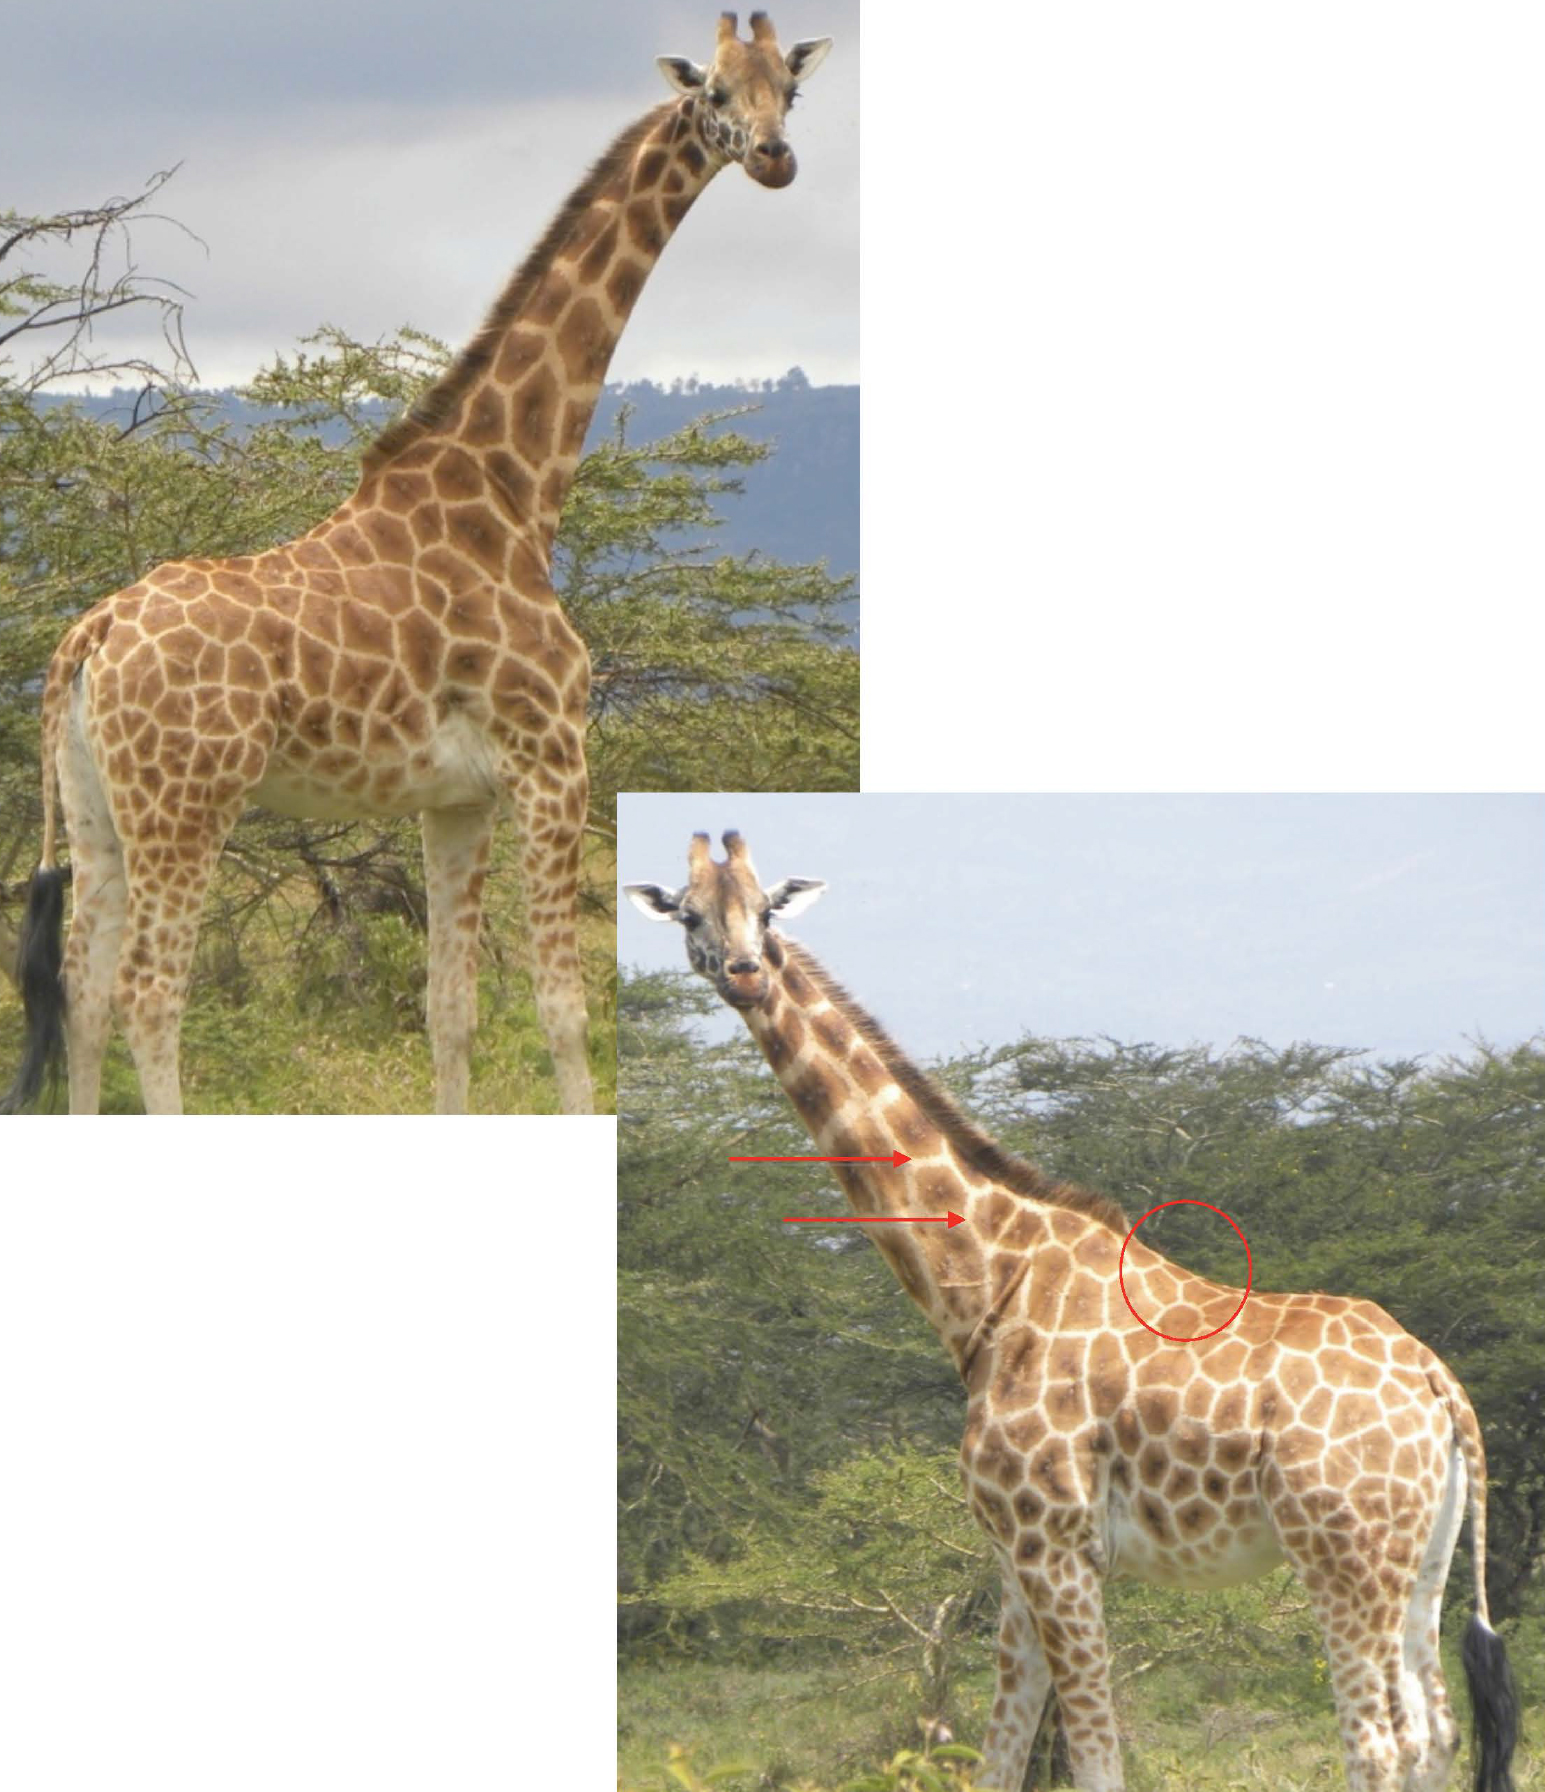 Giraffe identification